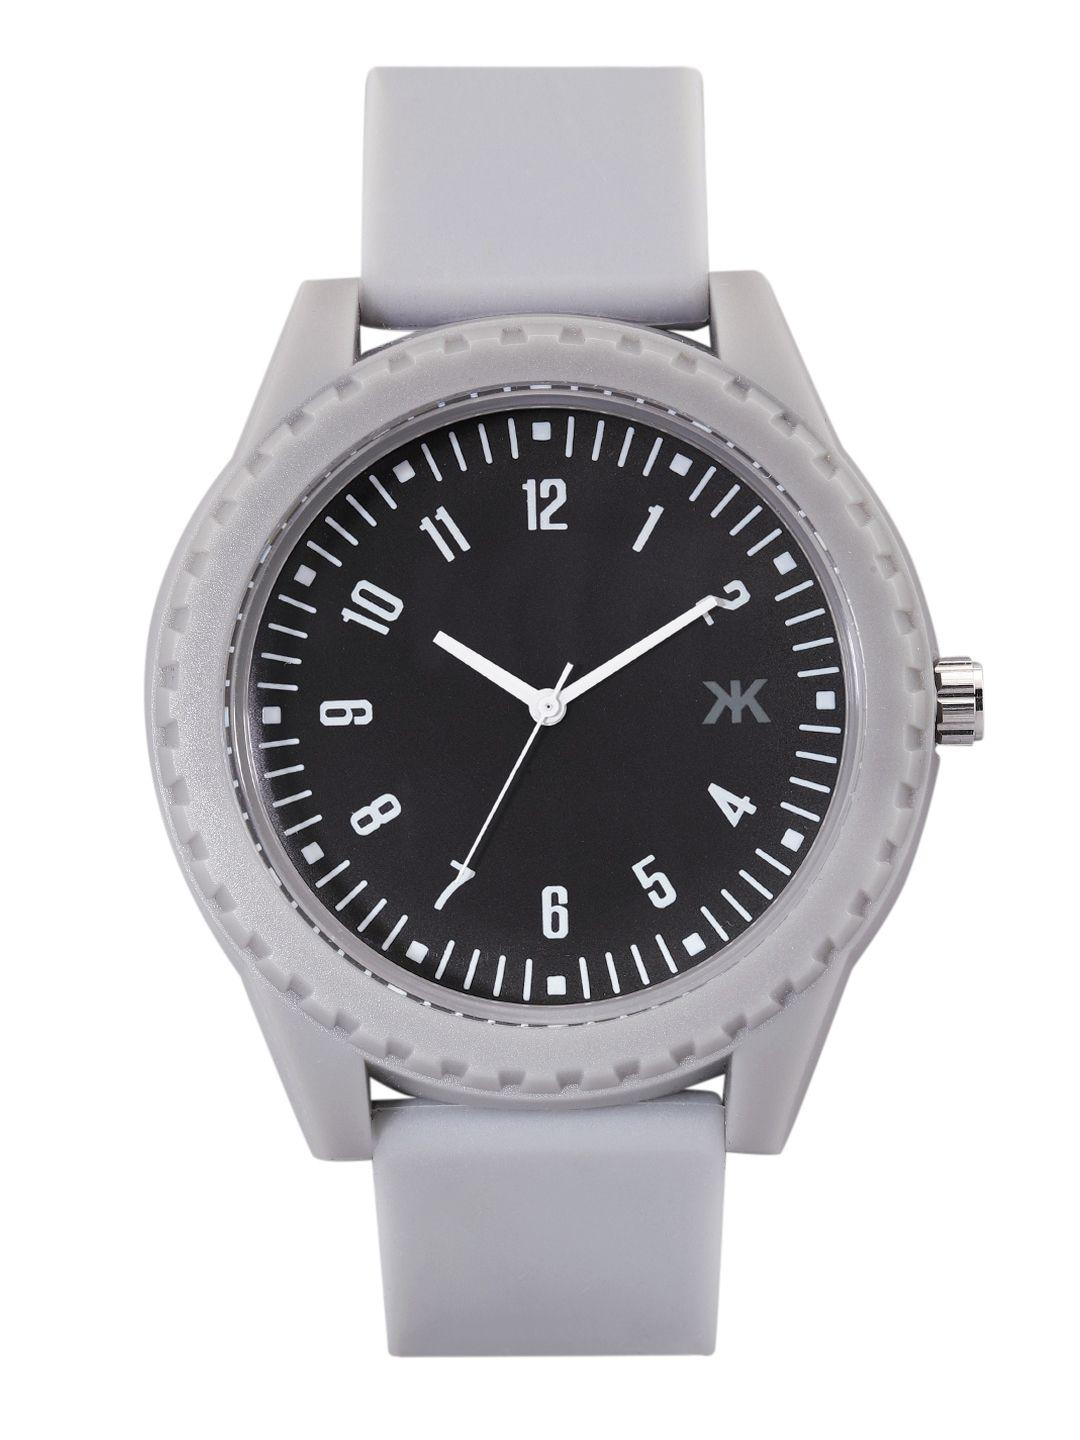 kook n keech unisex black solid analogue watch knk22-2a-grey